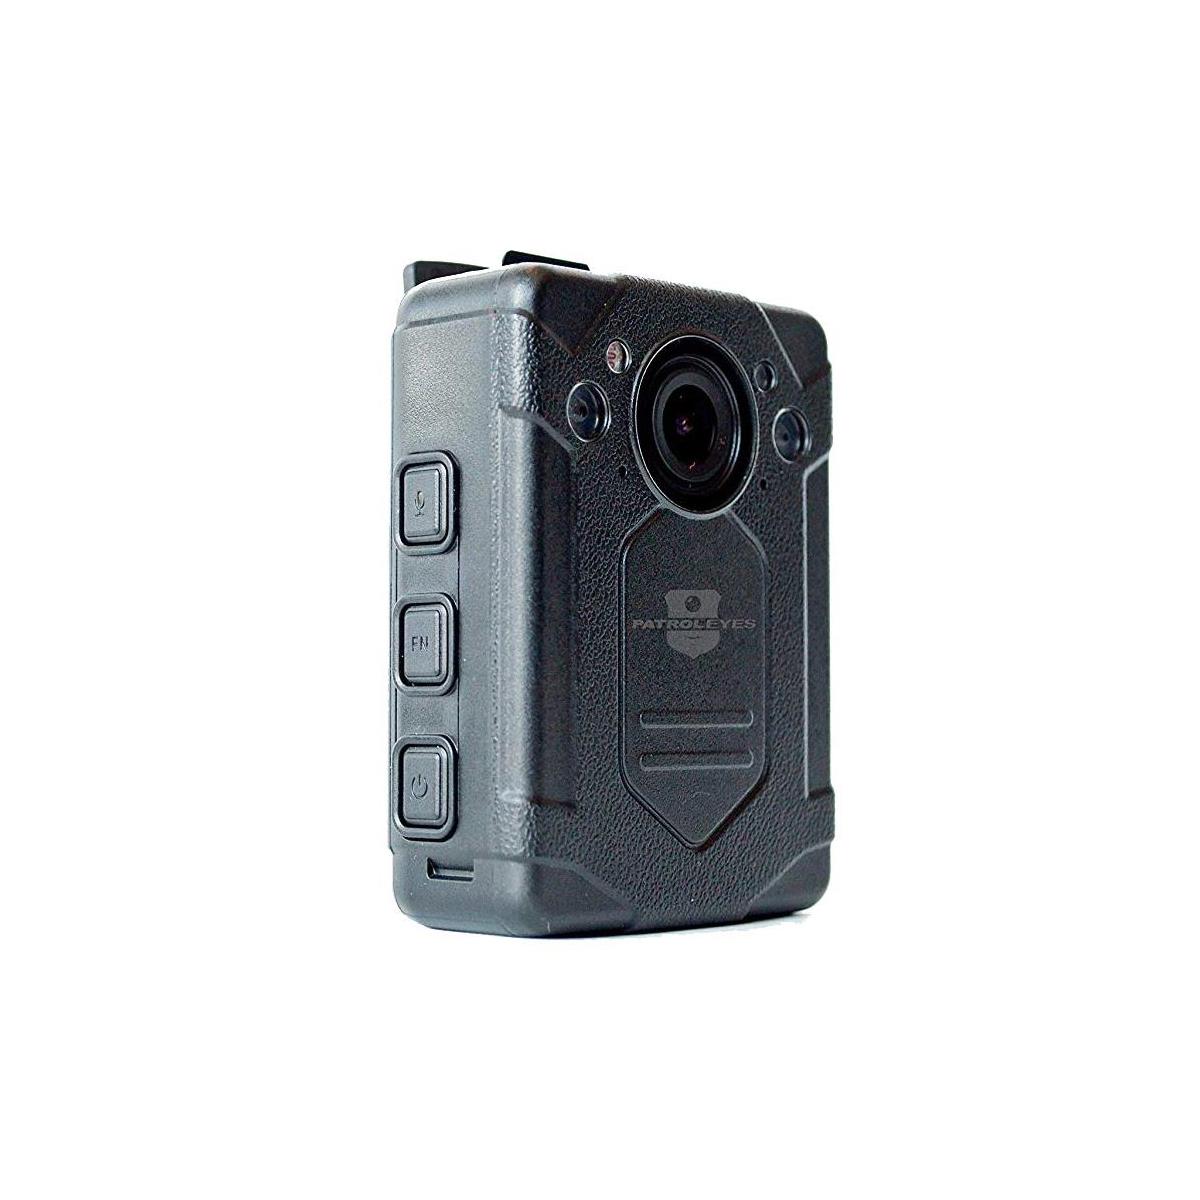 Image of Patrol Eyes PatrolEyes PE-MAX 2K GPS Auto Infrared Long Police Body Camera